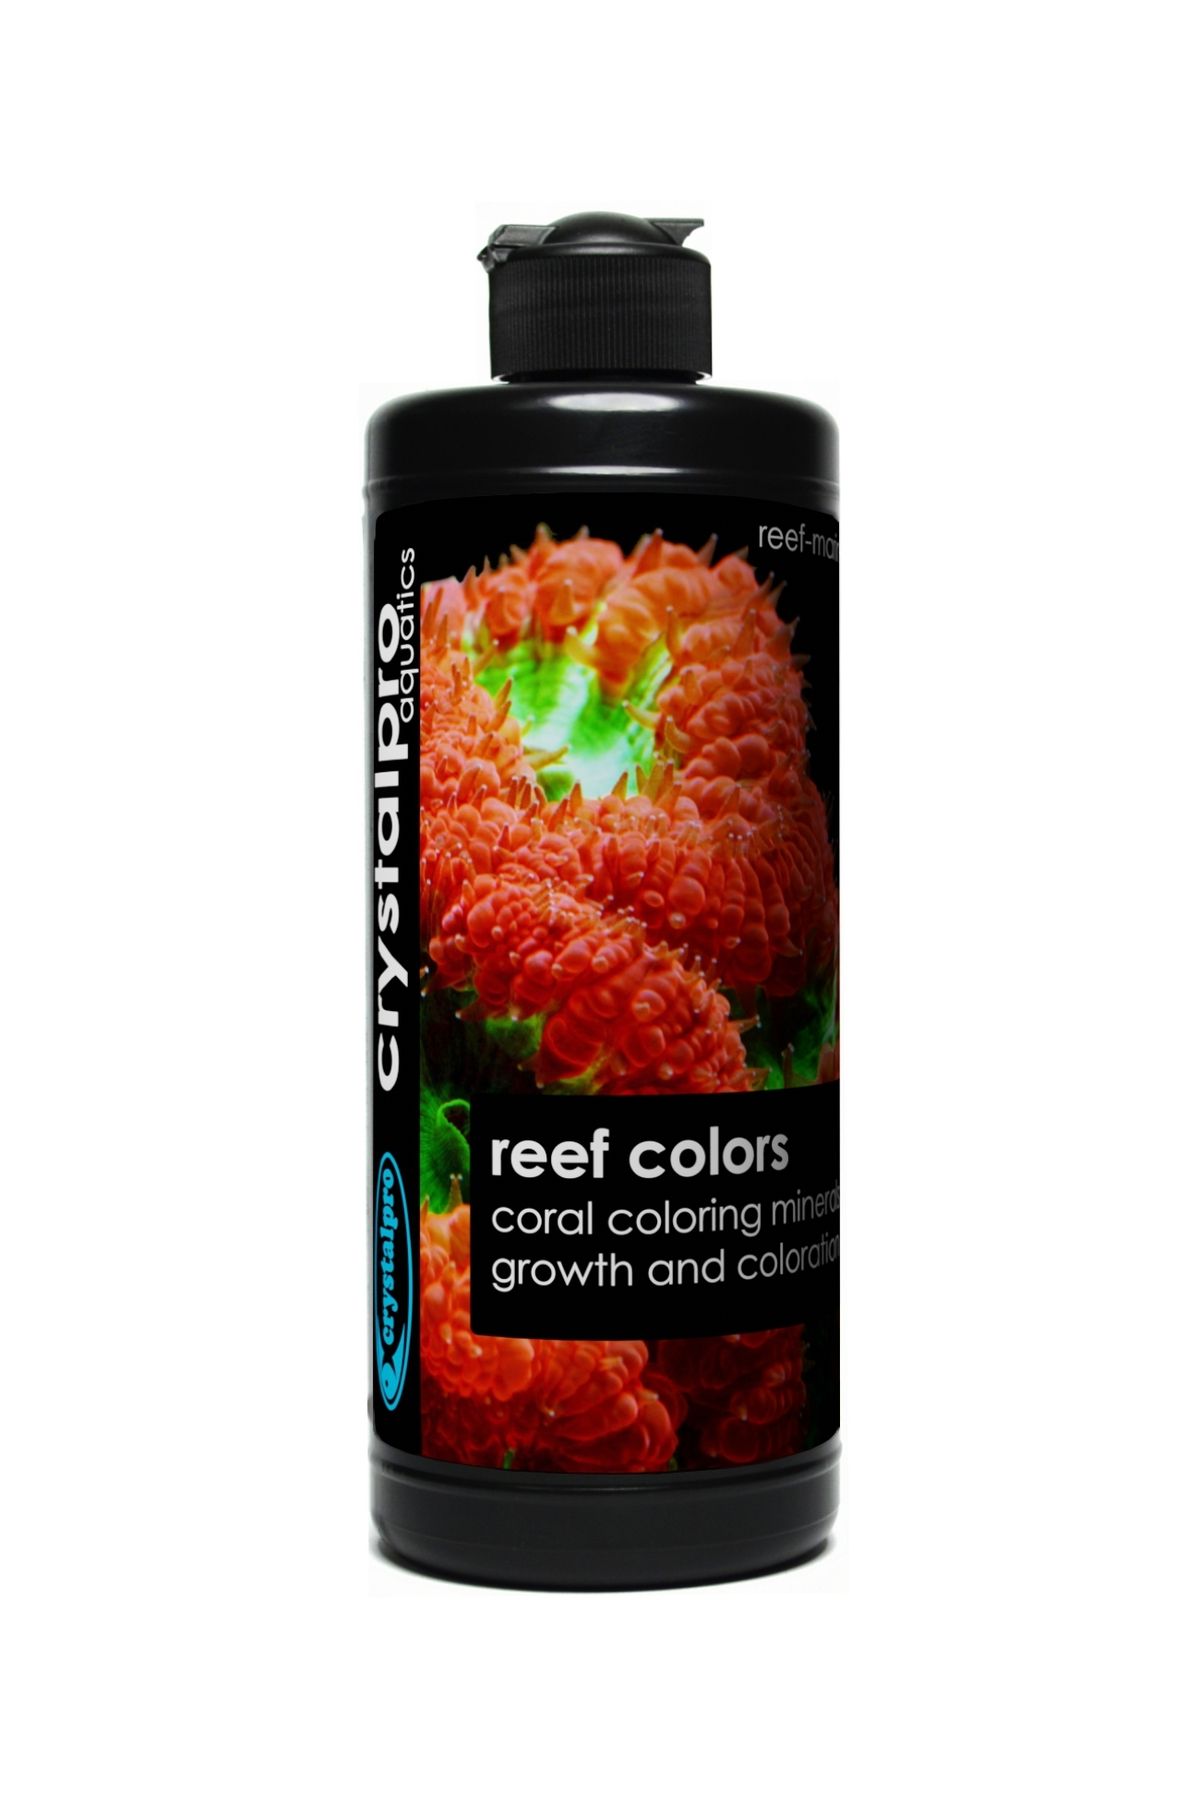 Crystalpro Reef Colors Mercan Tuzlusu Düzenleyicisi 500ml